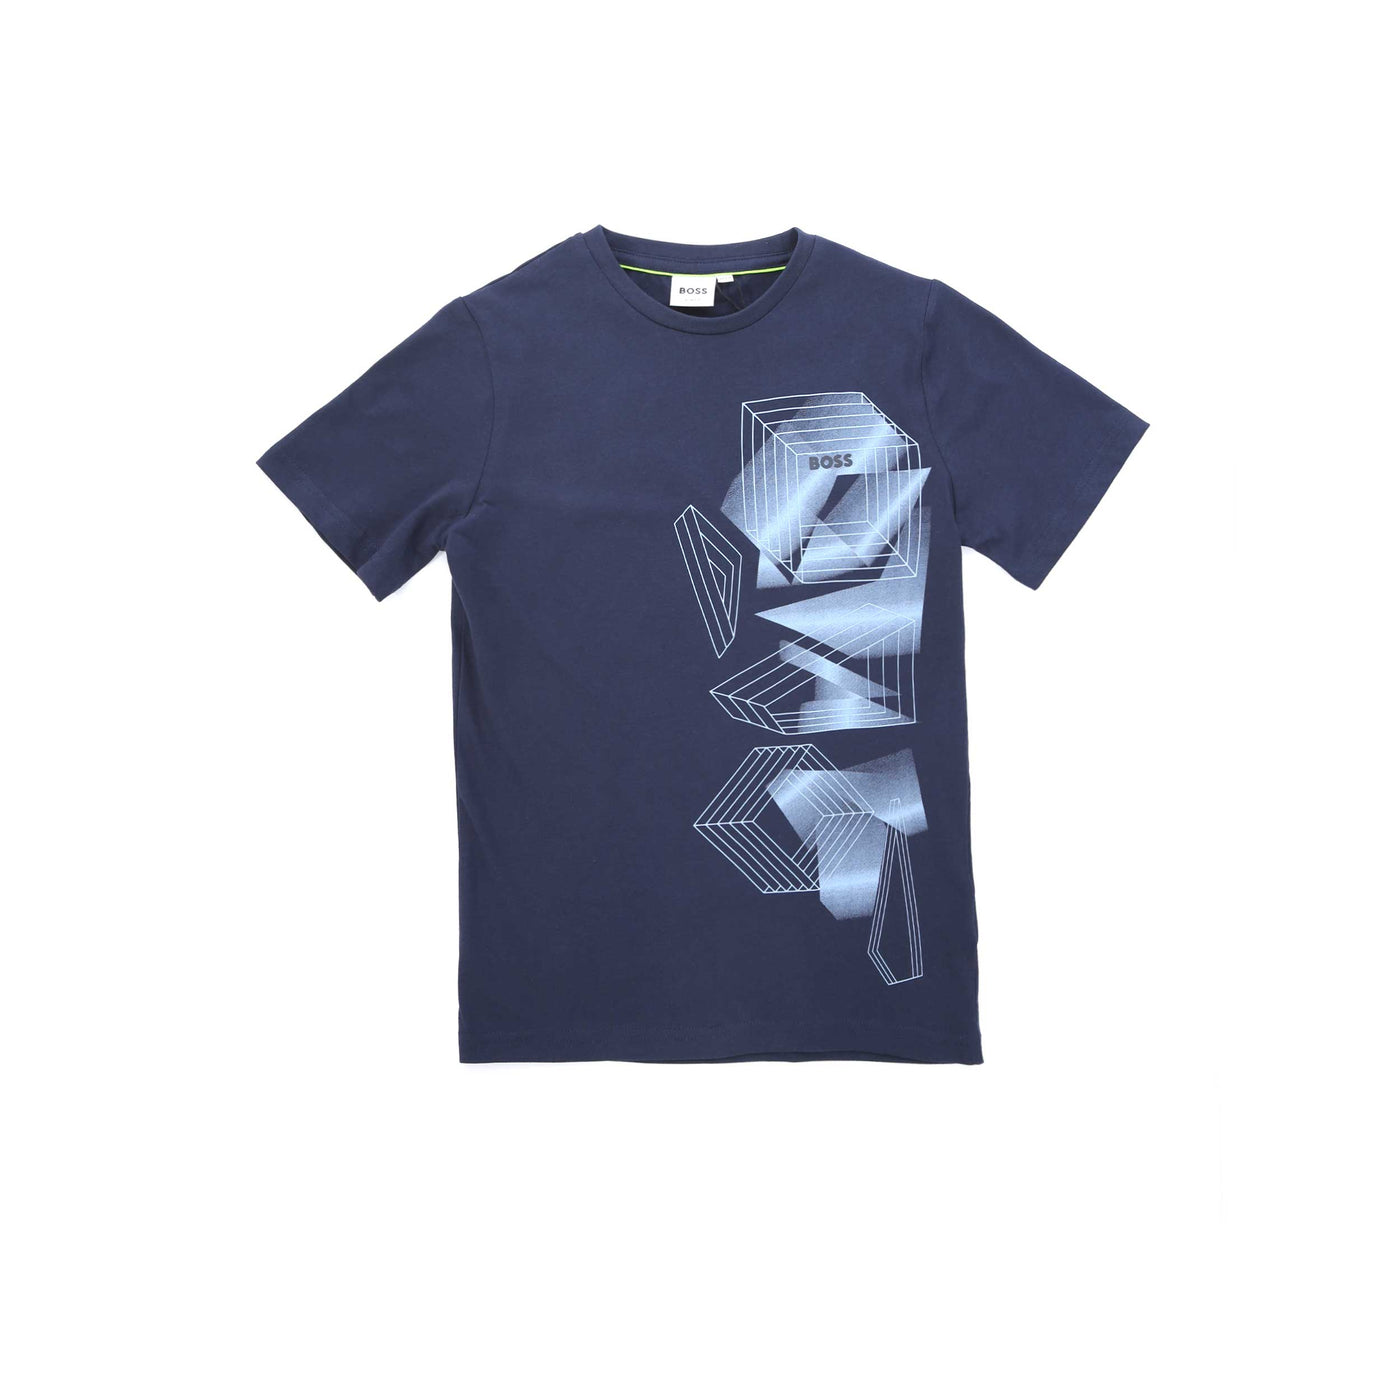 BOSS Kids Geometric Print T-Shirt in Navy